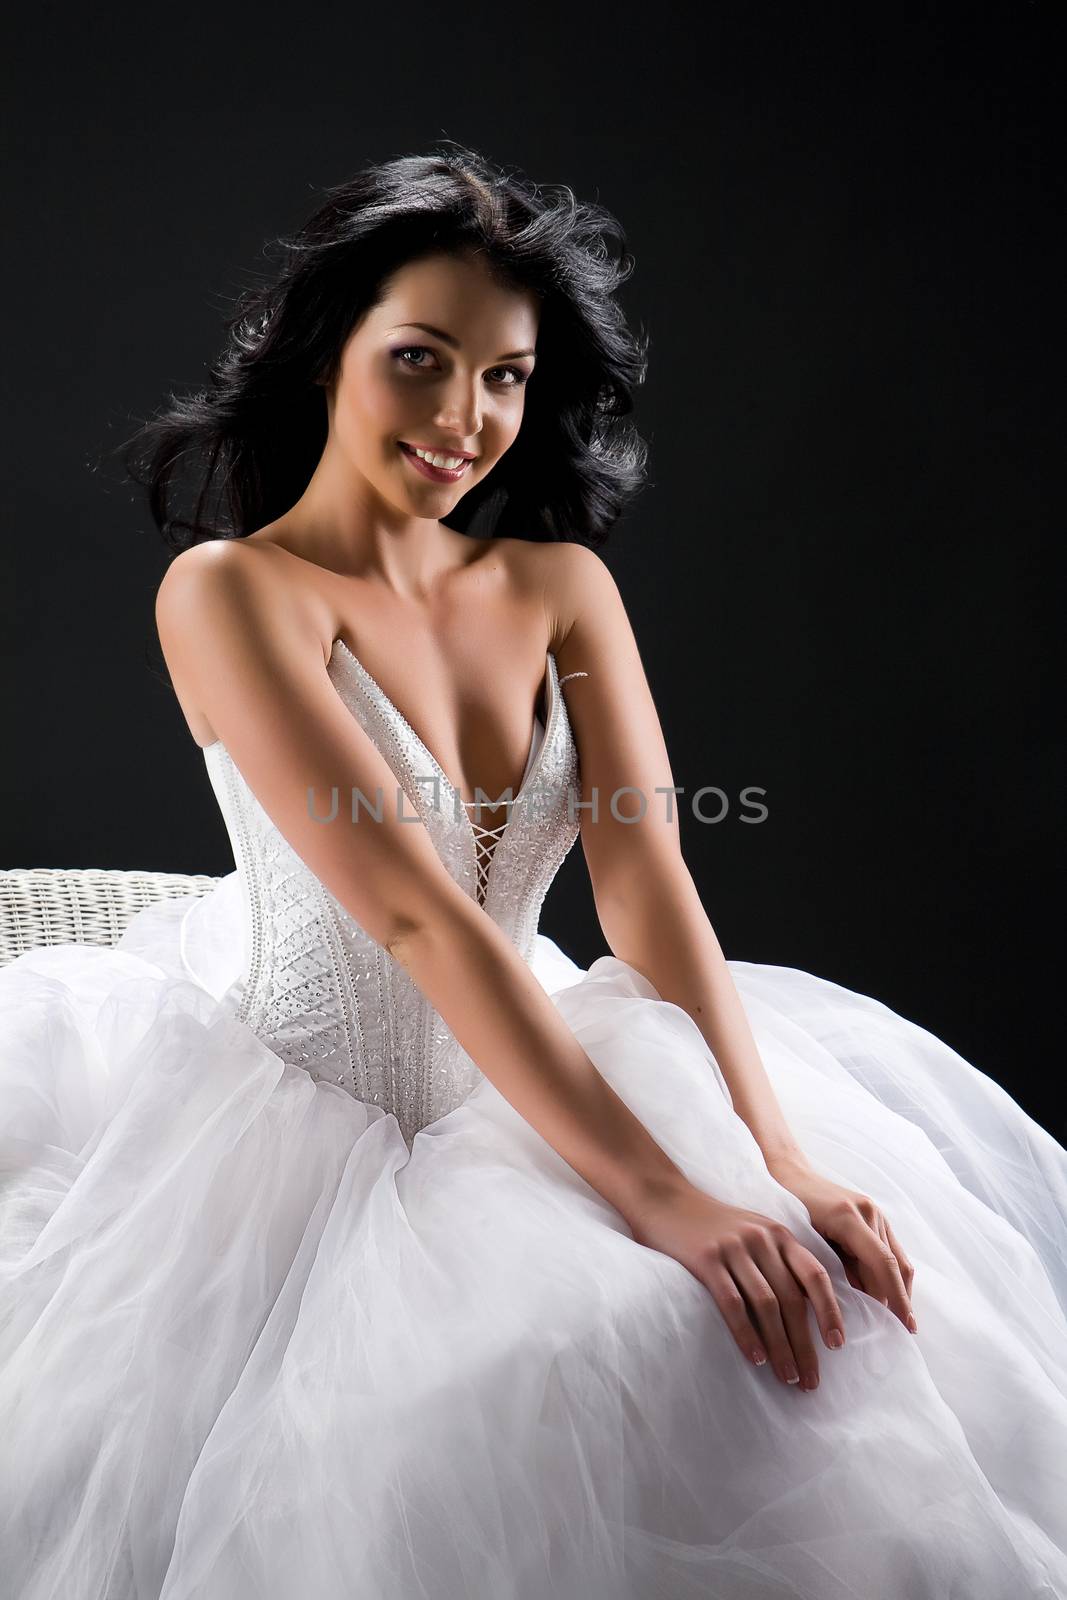 Young Bride by Fotoskat